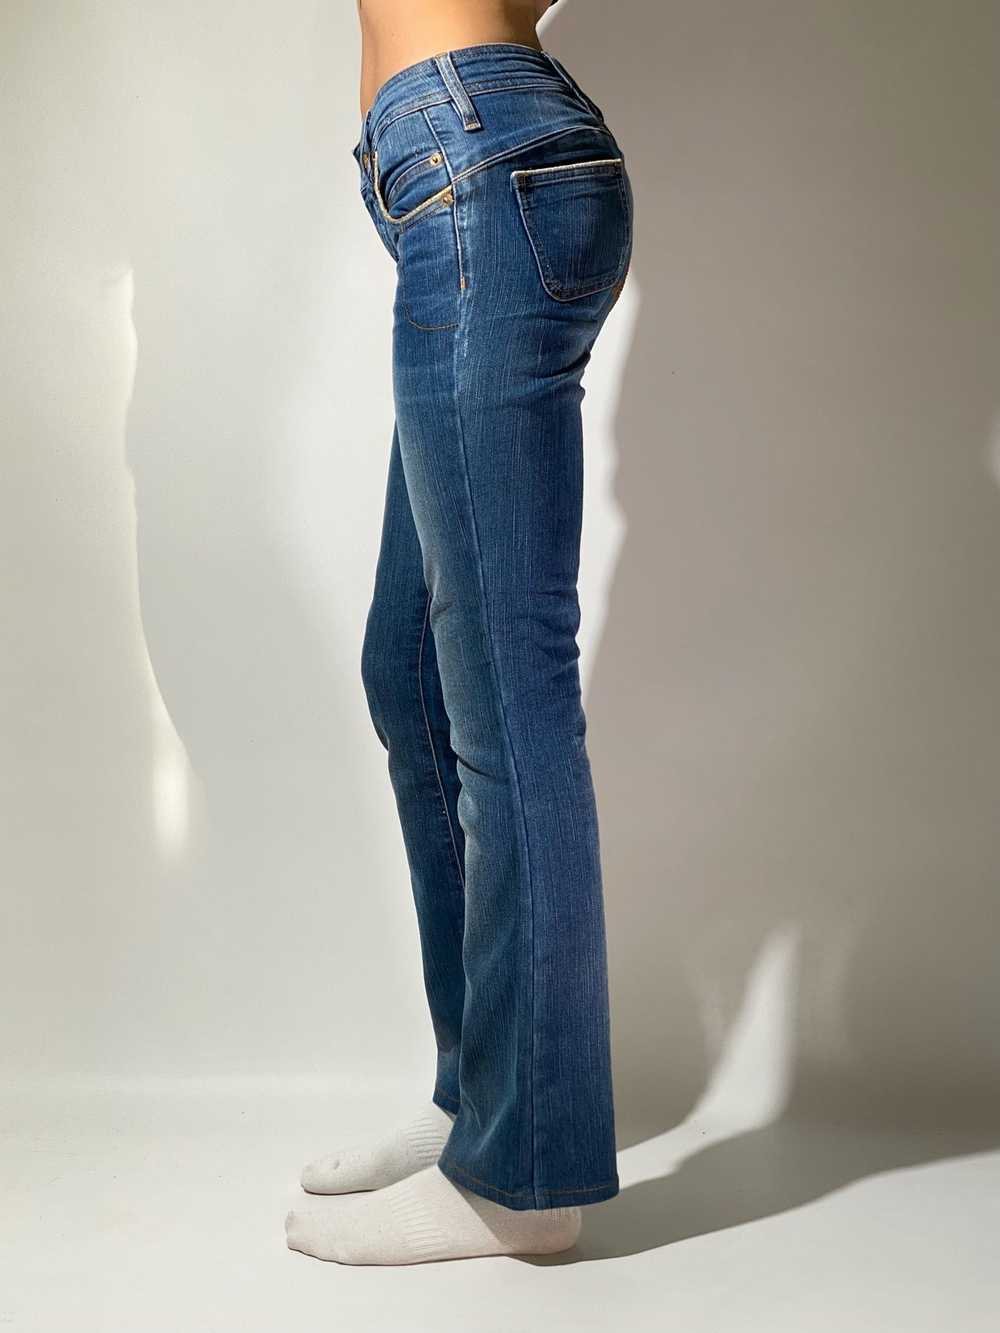 John Galliano John Galliano vintage blue jeans - image 3